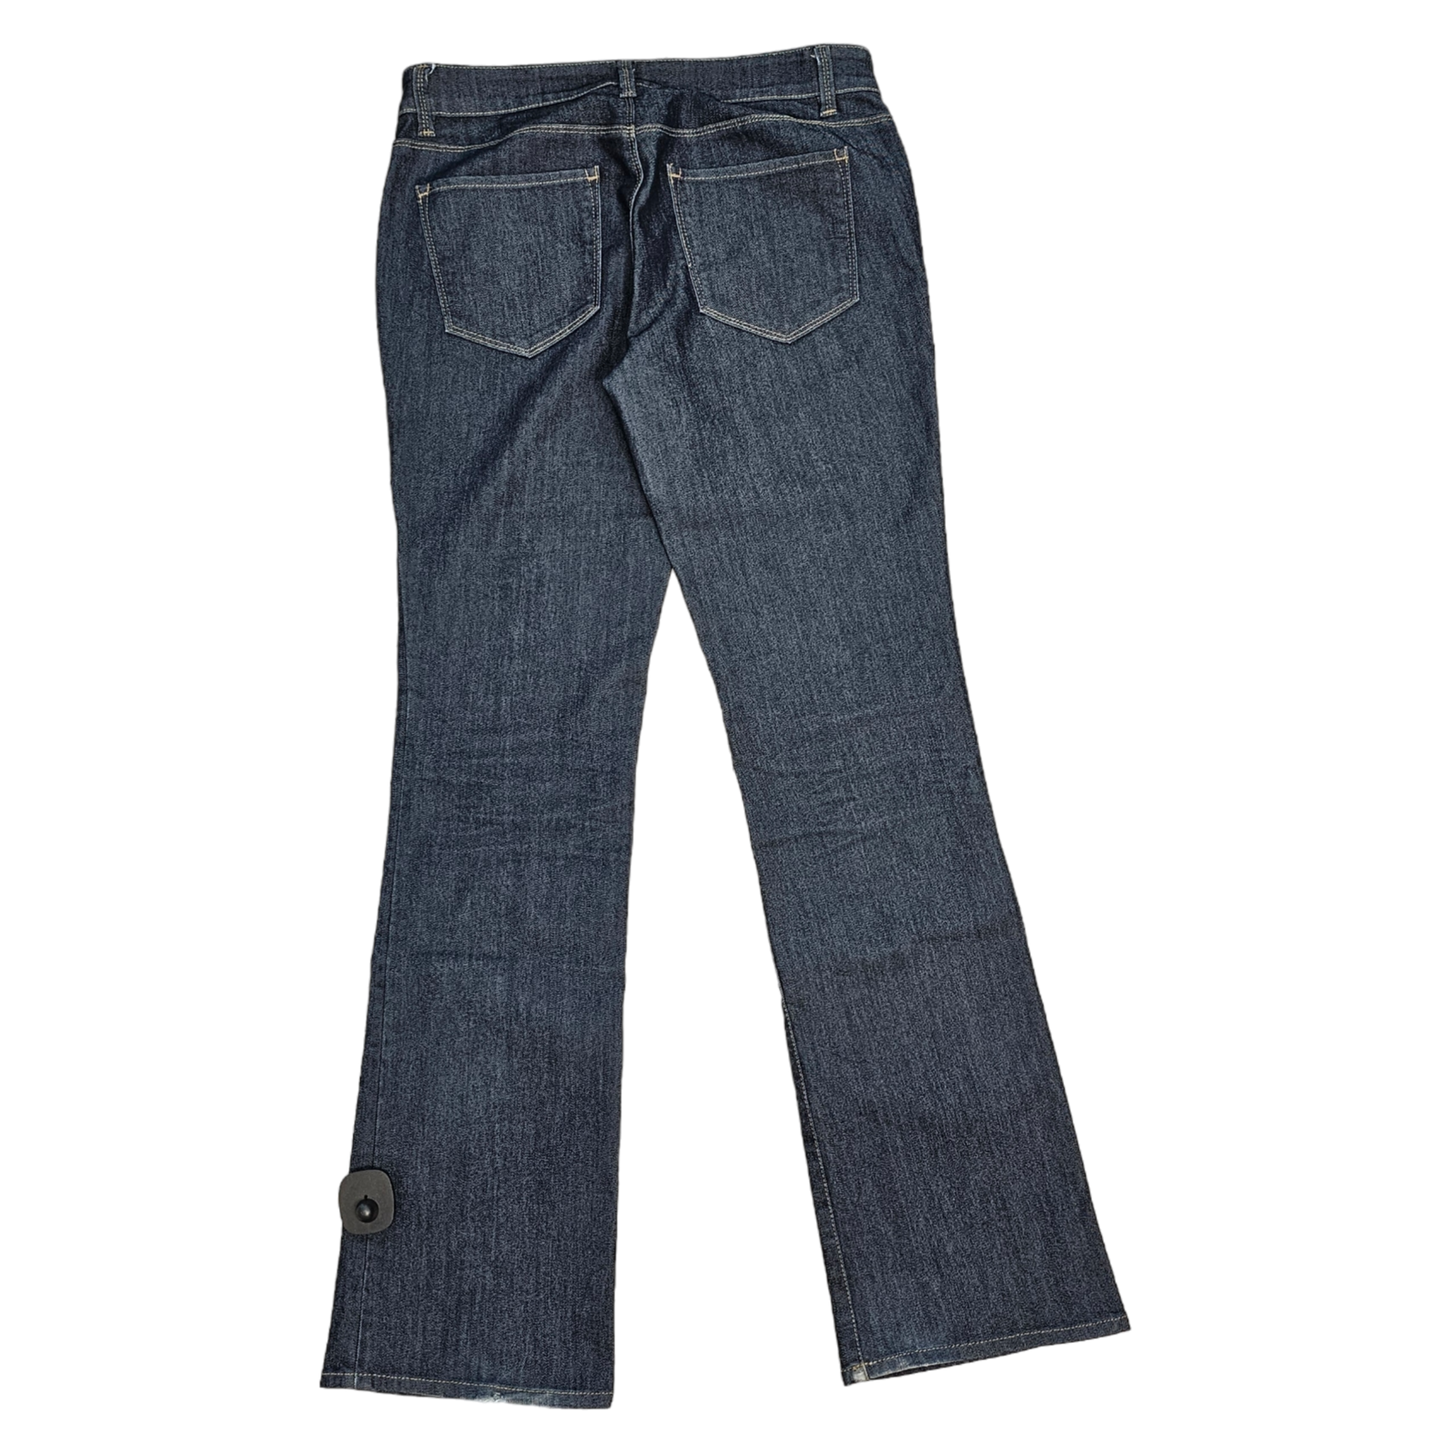 Jeans Wide Leg By Ann Taylor  Size: 6